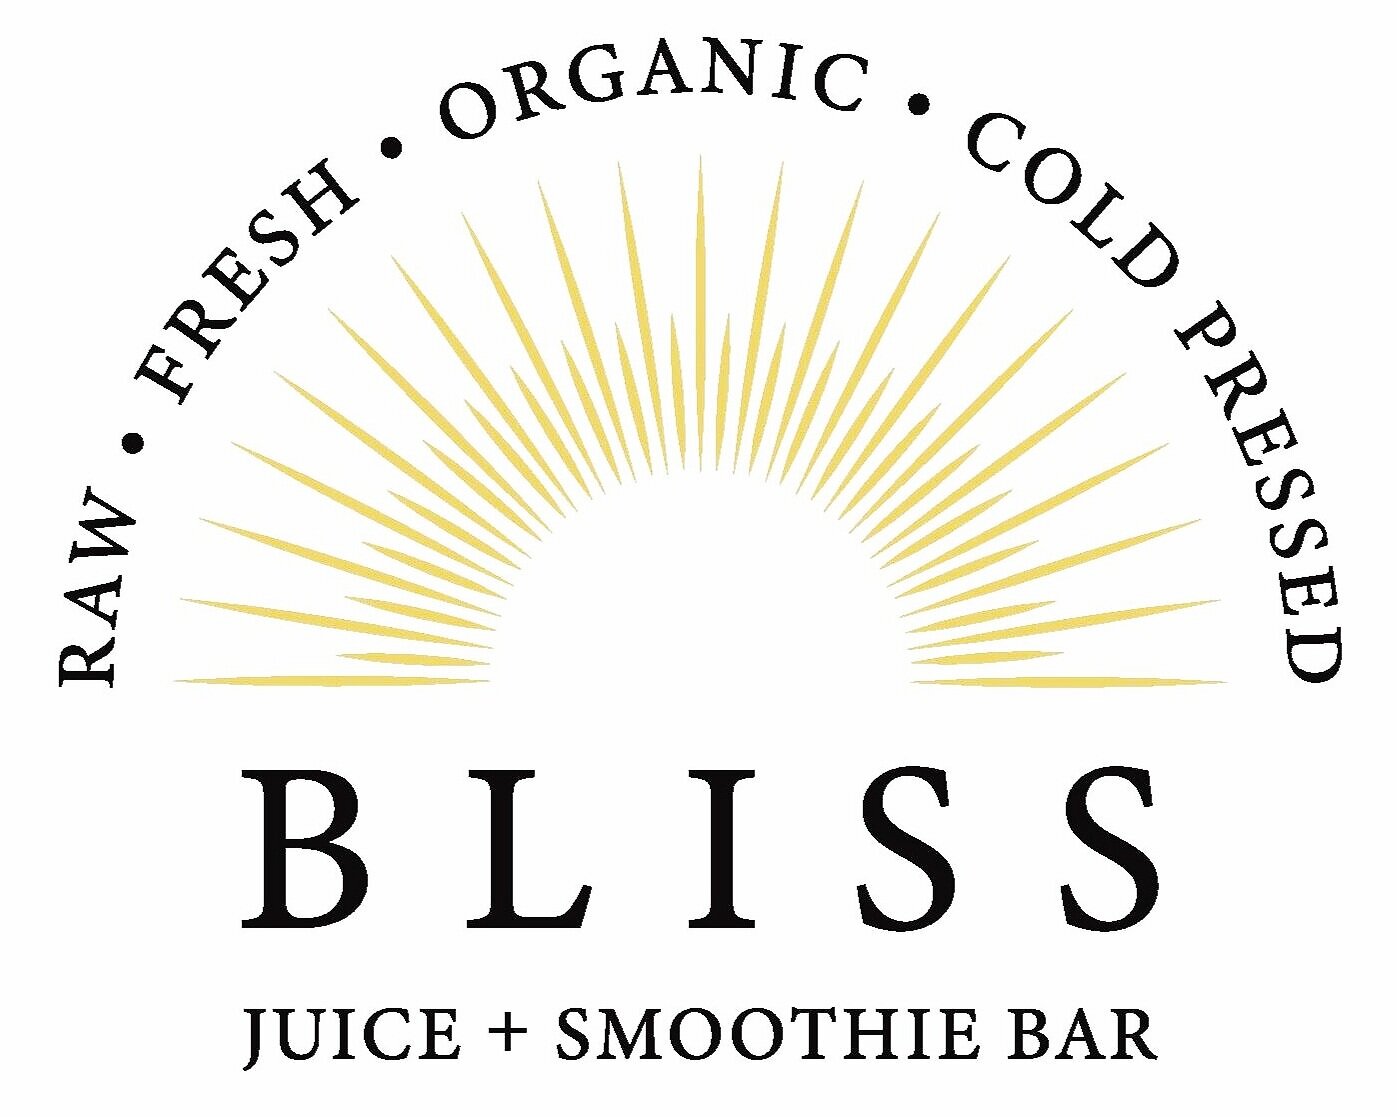 Bliss Juice Bar